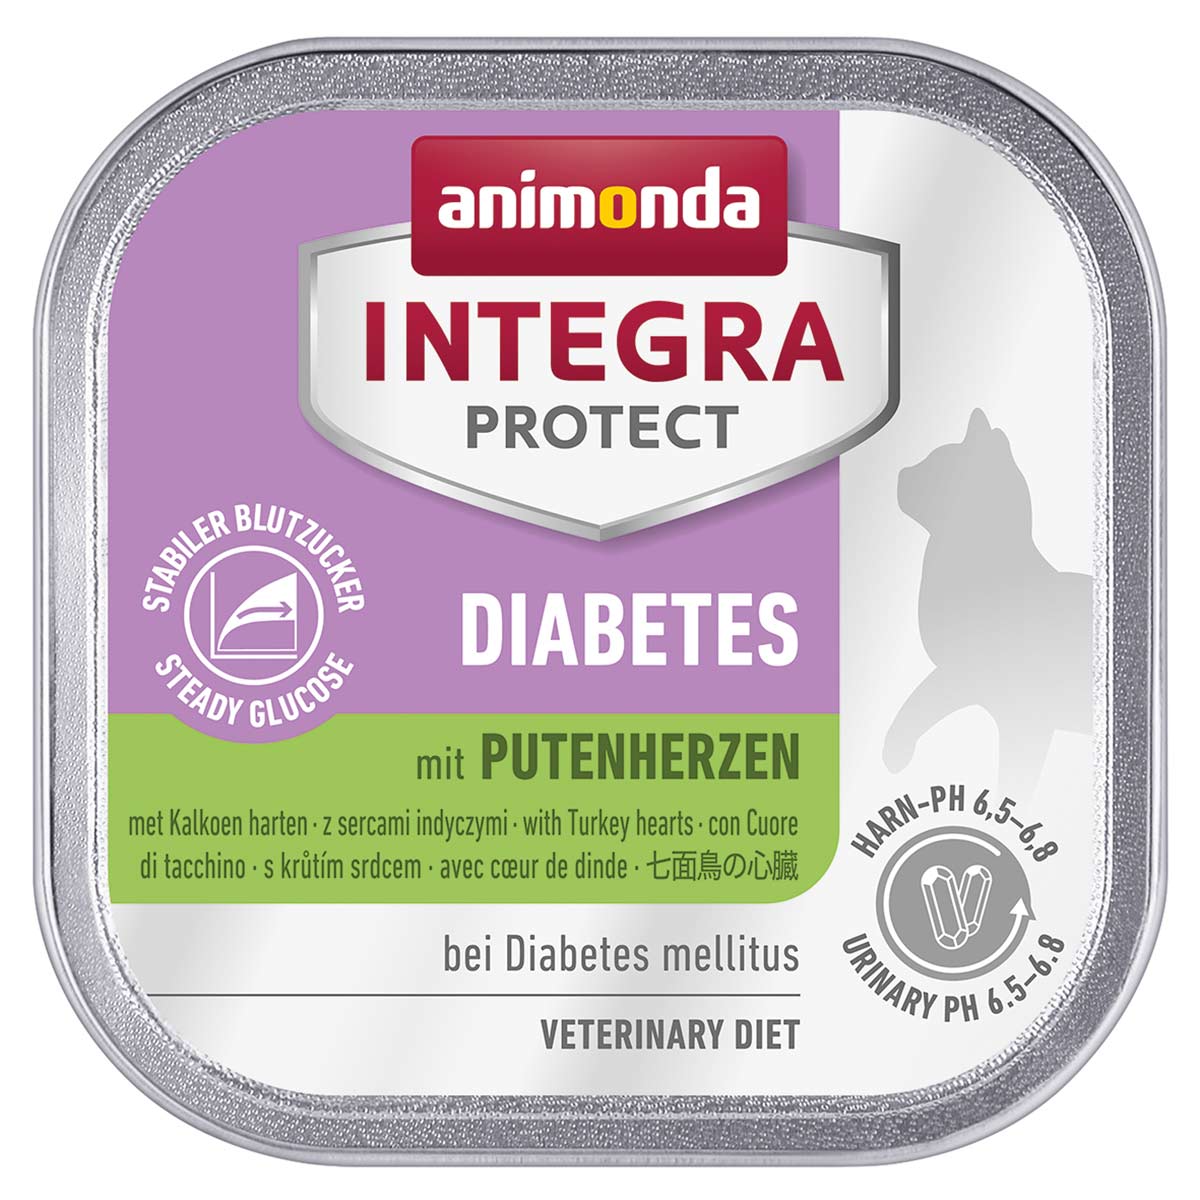 animonda INTEGRA PROTECT Diabetes mit Putenherzen 32x100g